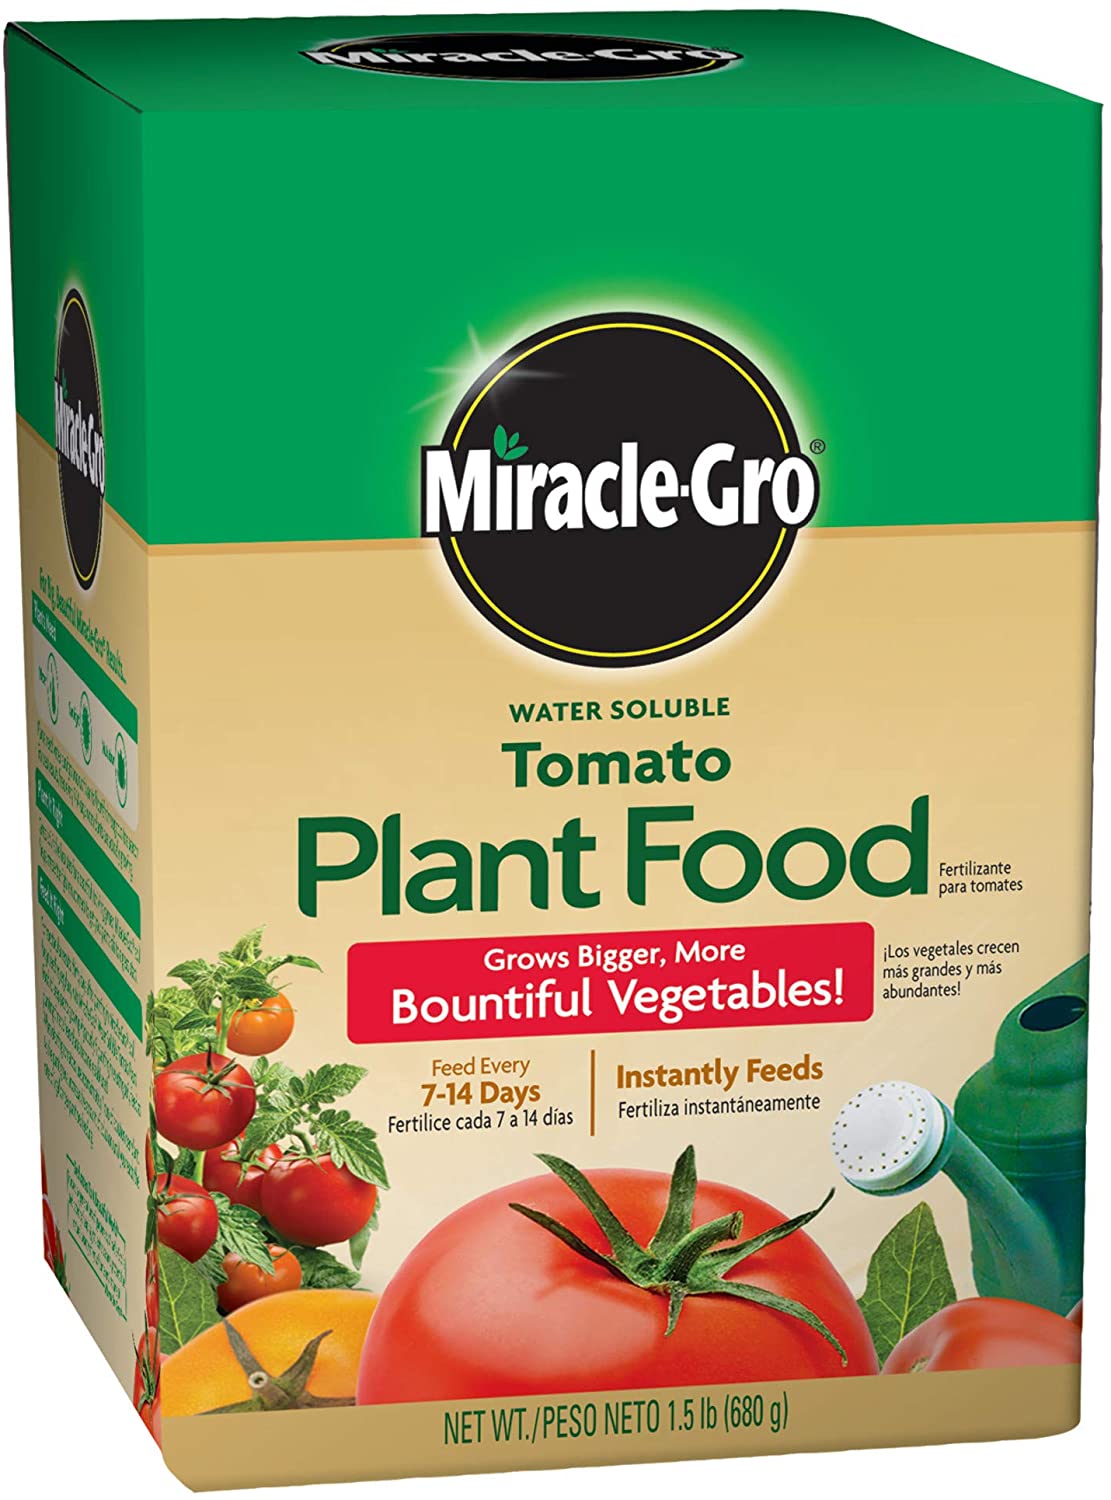 Miracle Gro Tomato Fertilizer 1.5 lb. box